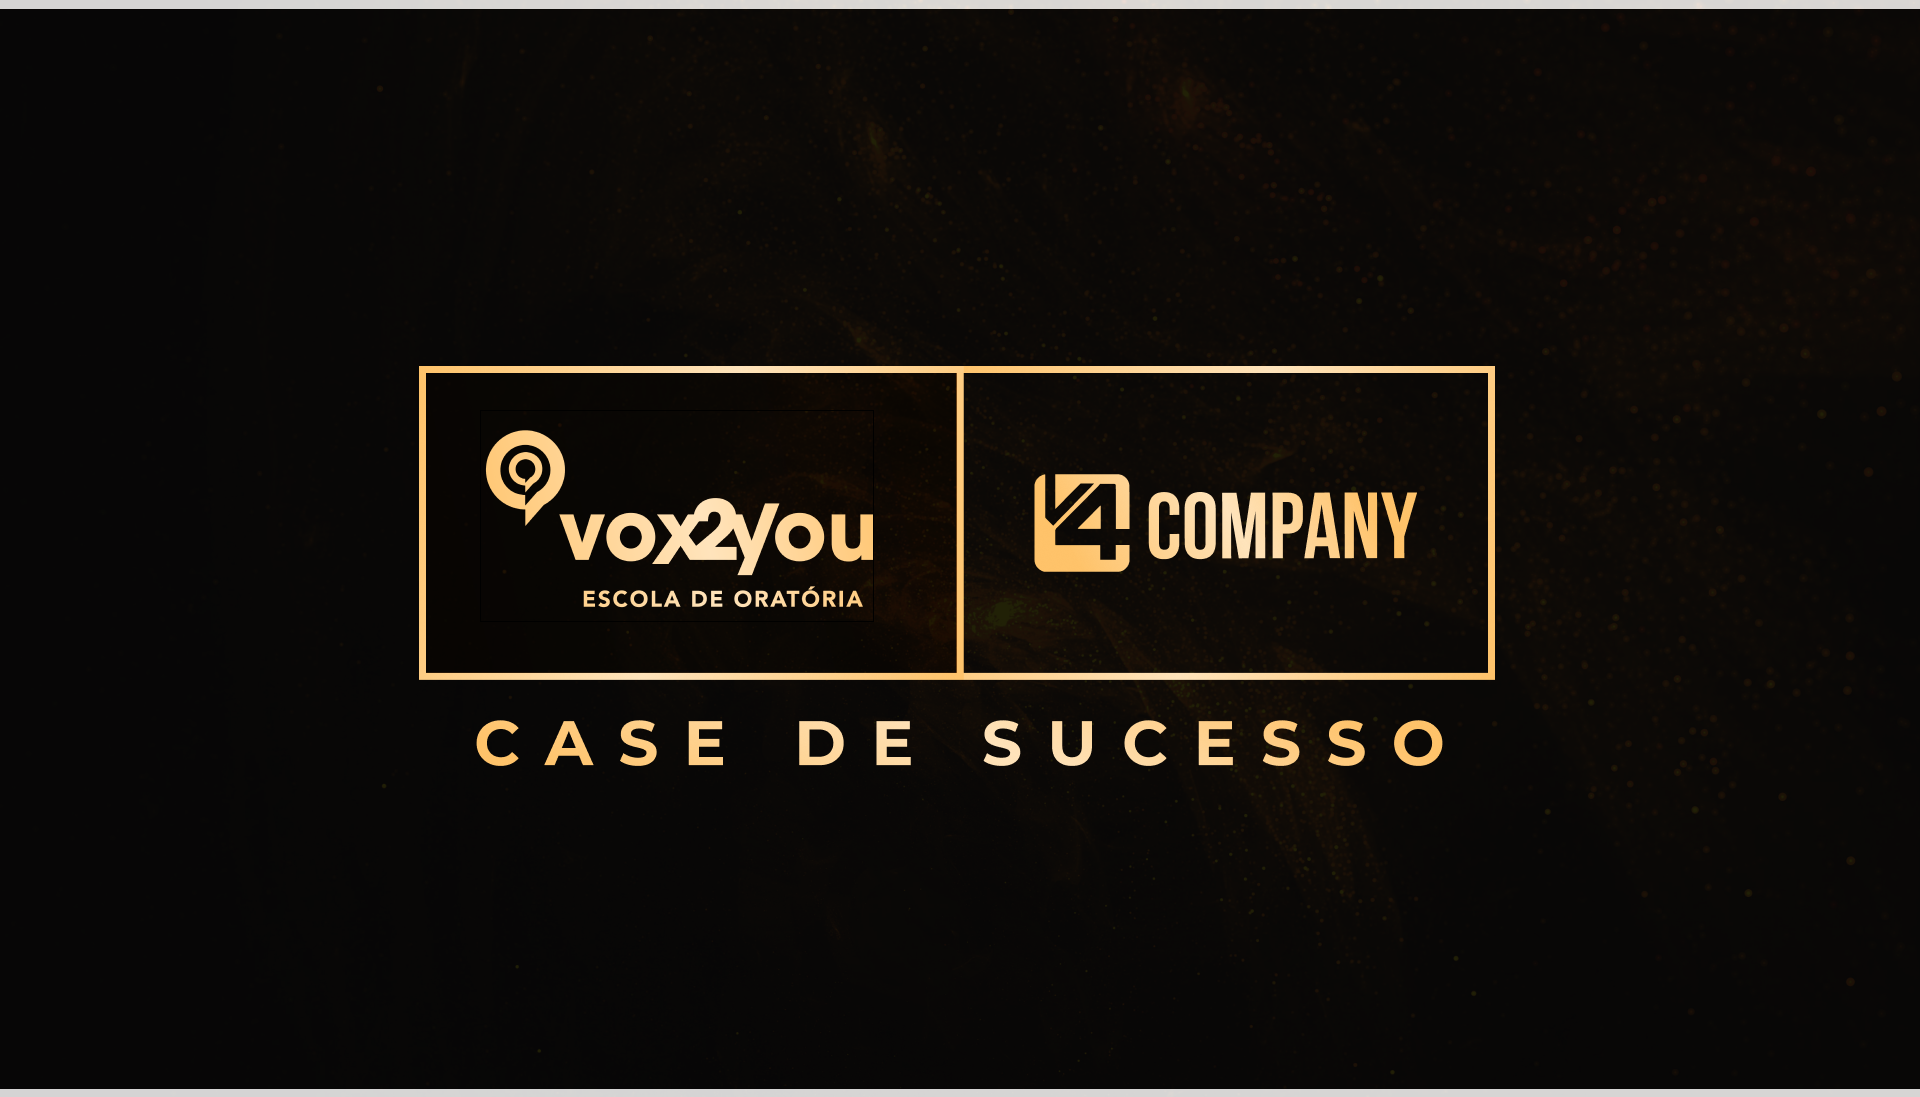 vox2you-case-v4-company